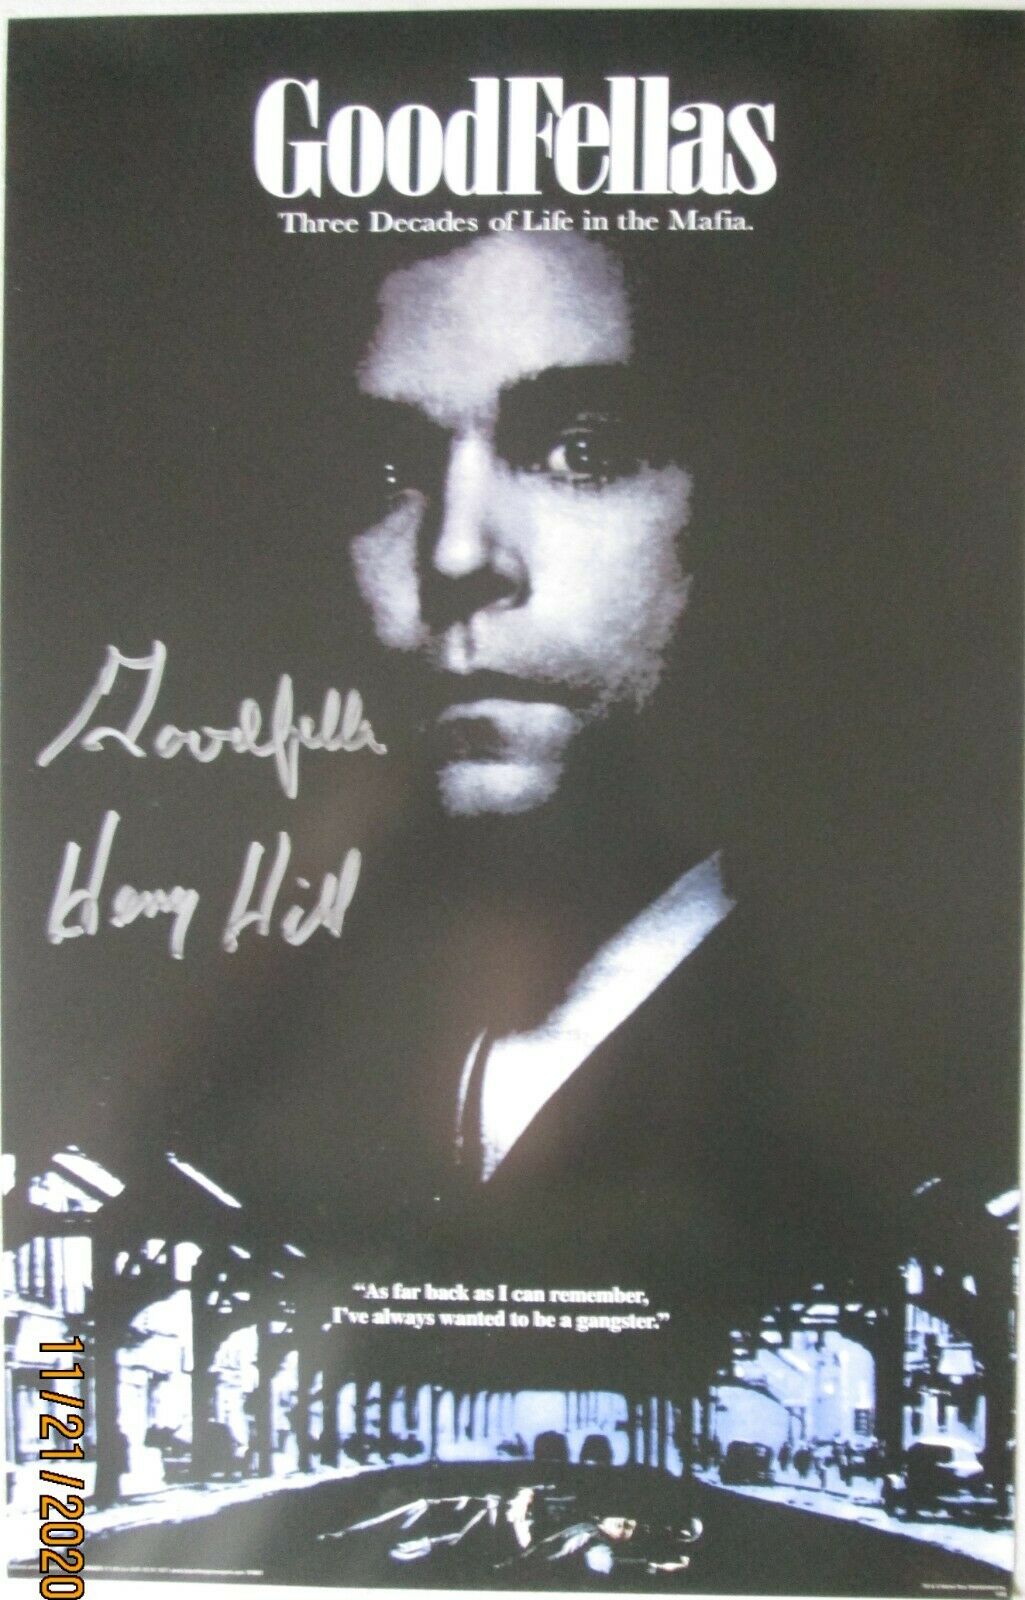 Henry Hill The Original Goodfella  "goodfellas" Signed Poster 11x17